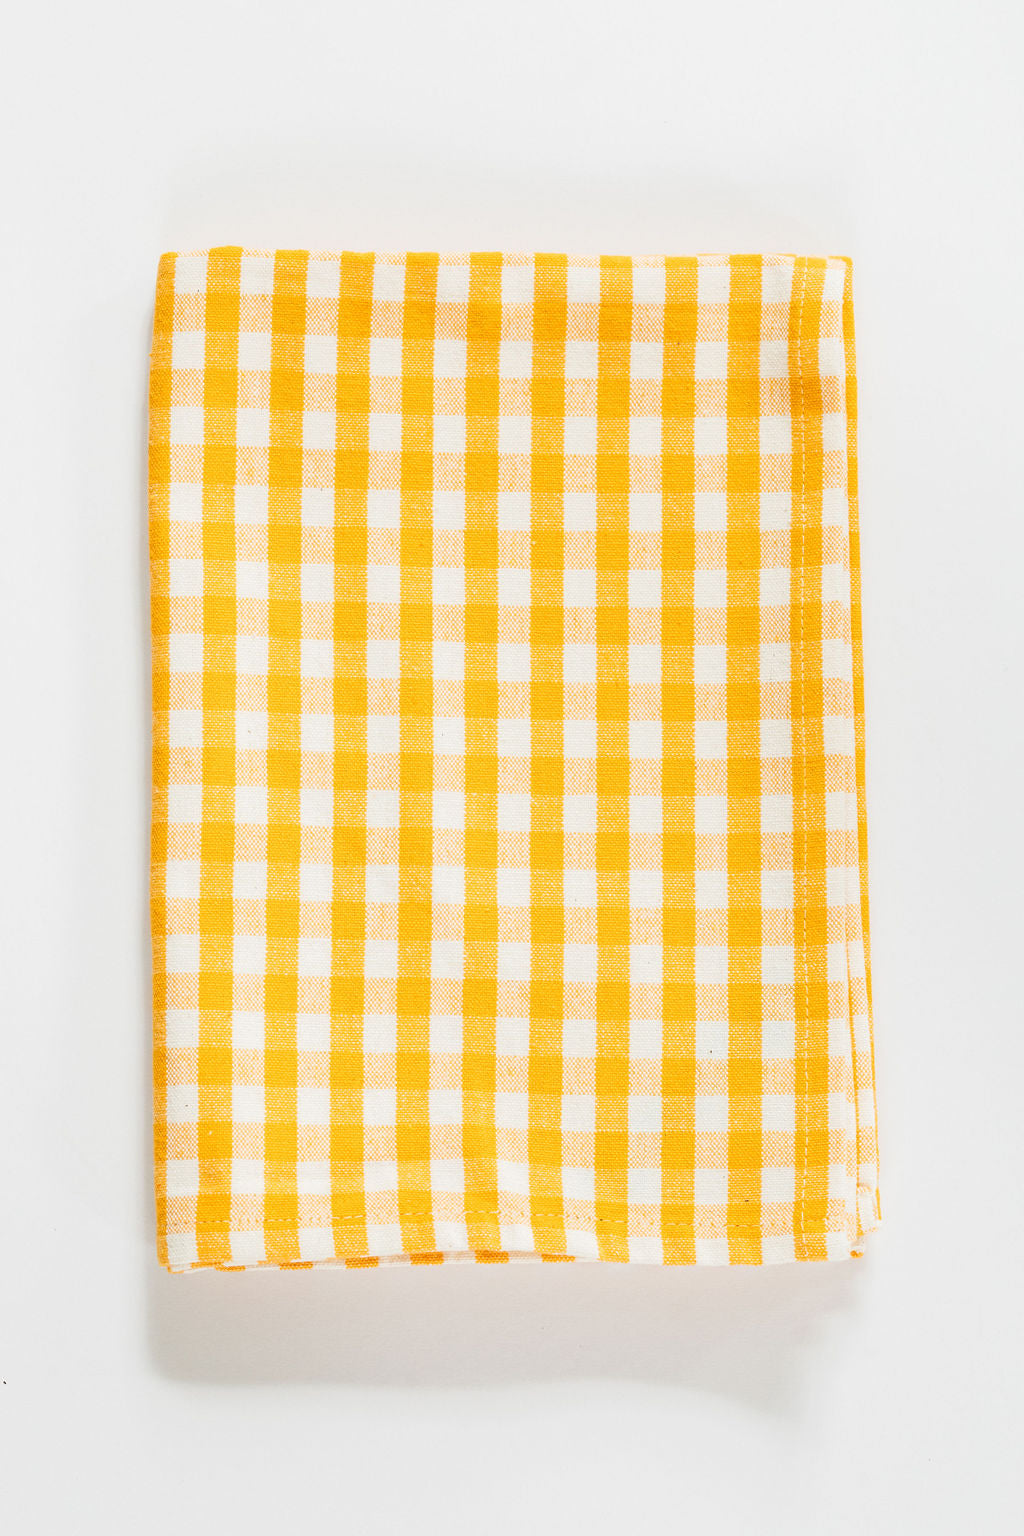 Gingham Check Yellow Kitchen Towel